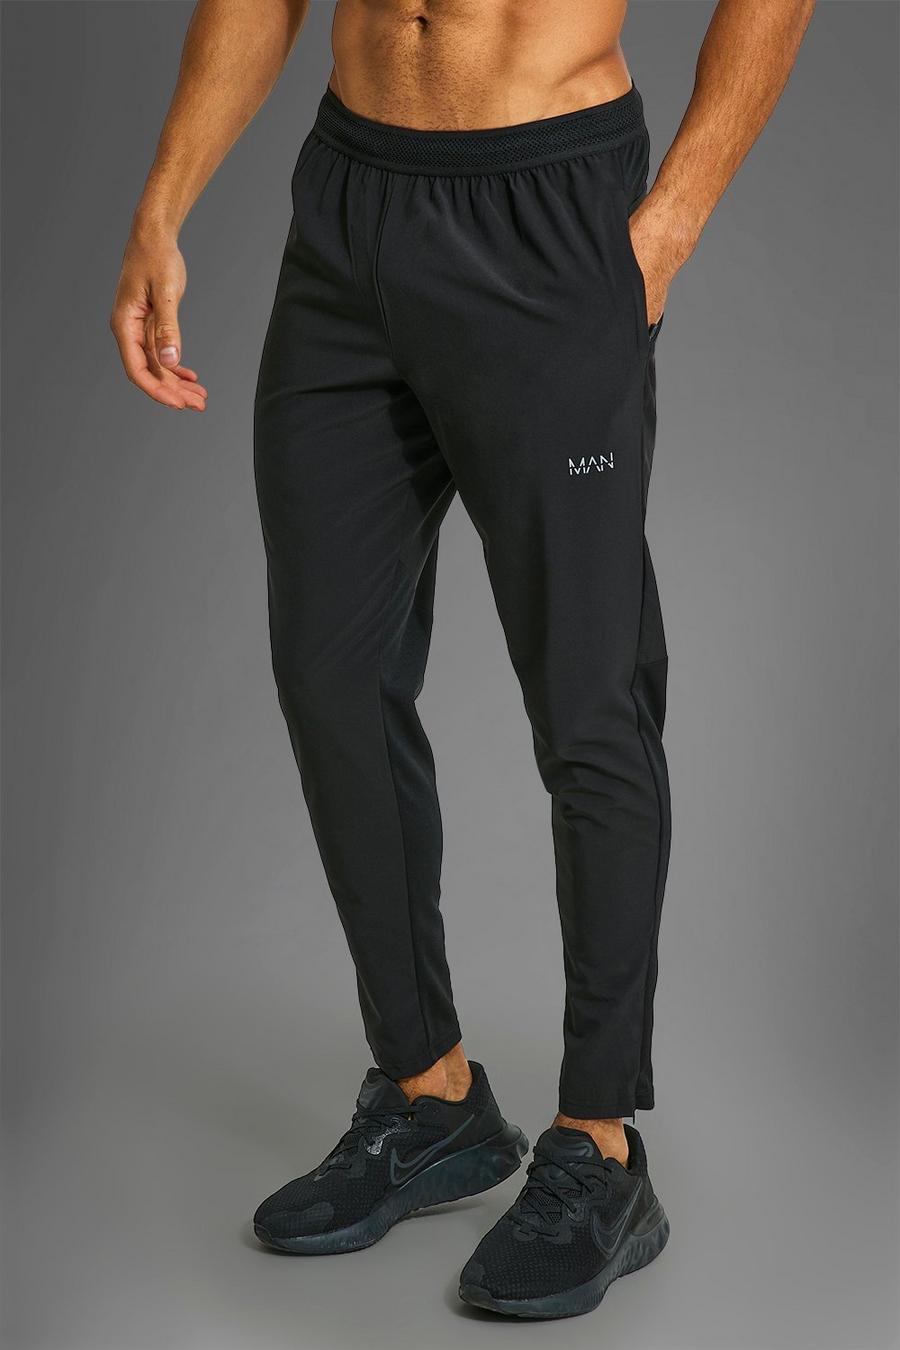 Pantaloni tuta Man Active Gym per alta performance con tasche e zip, Black image number 1